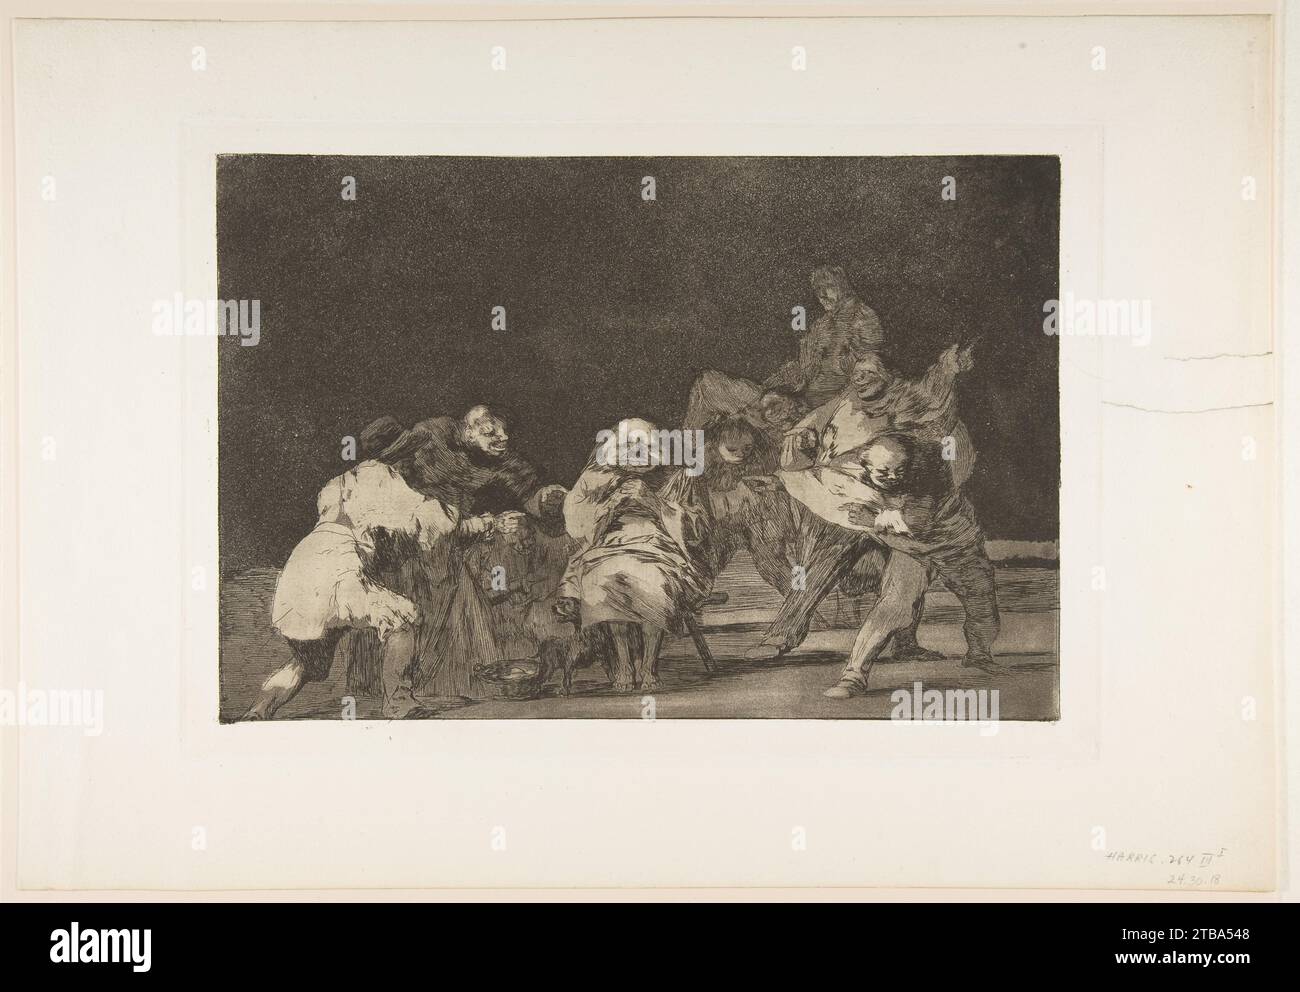 'Lealta' da 'Disparates' (Follies / Irrationalities) 1924 di Goya (Francisco de Goya y Lucientes) Foto Stock